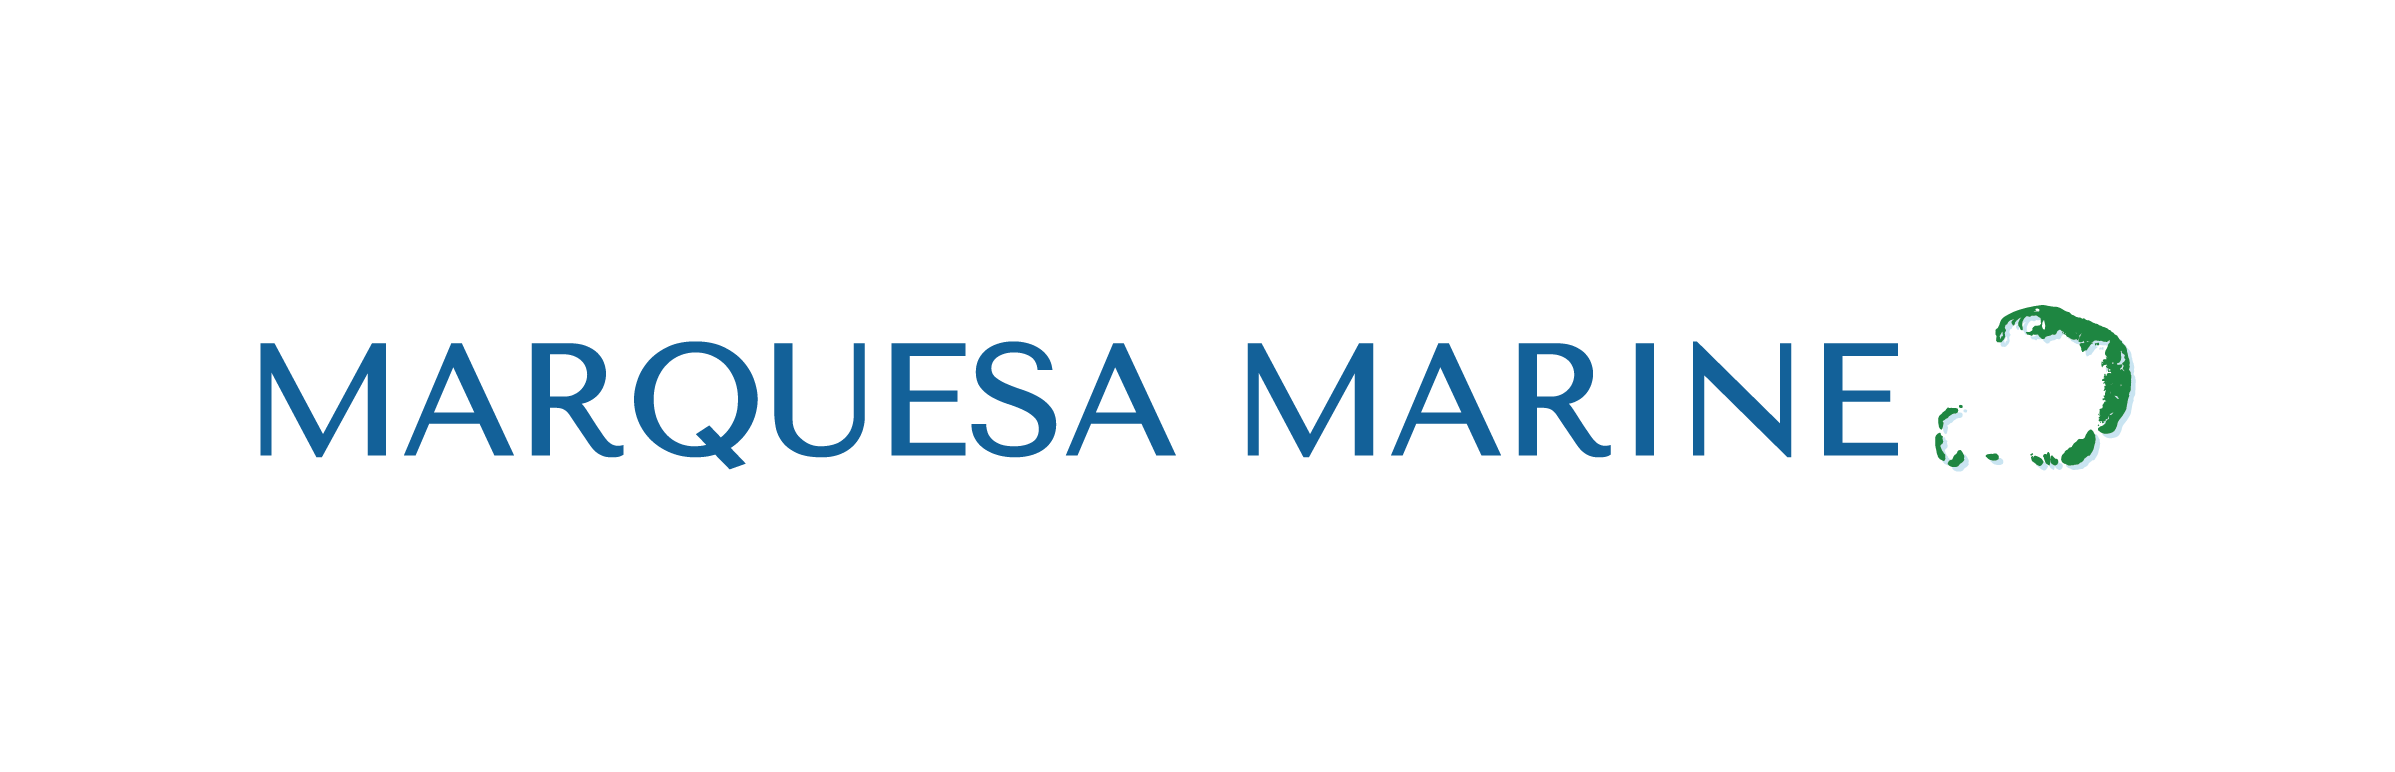 Home - Marquesa Marine